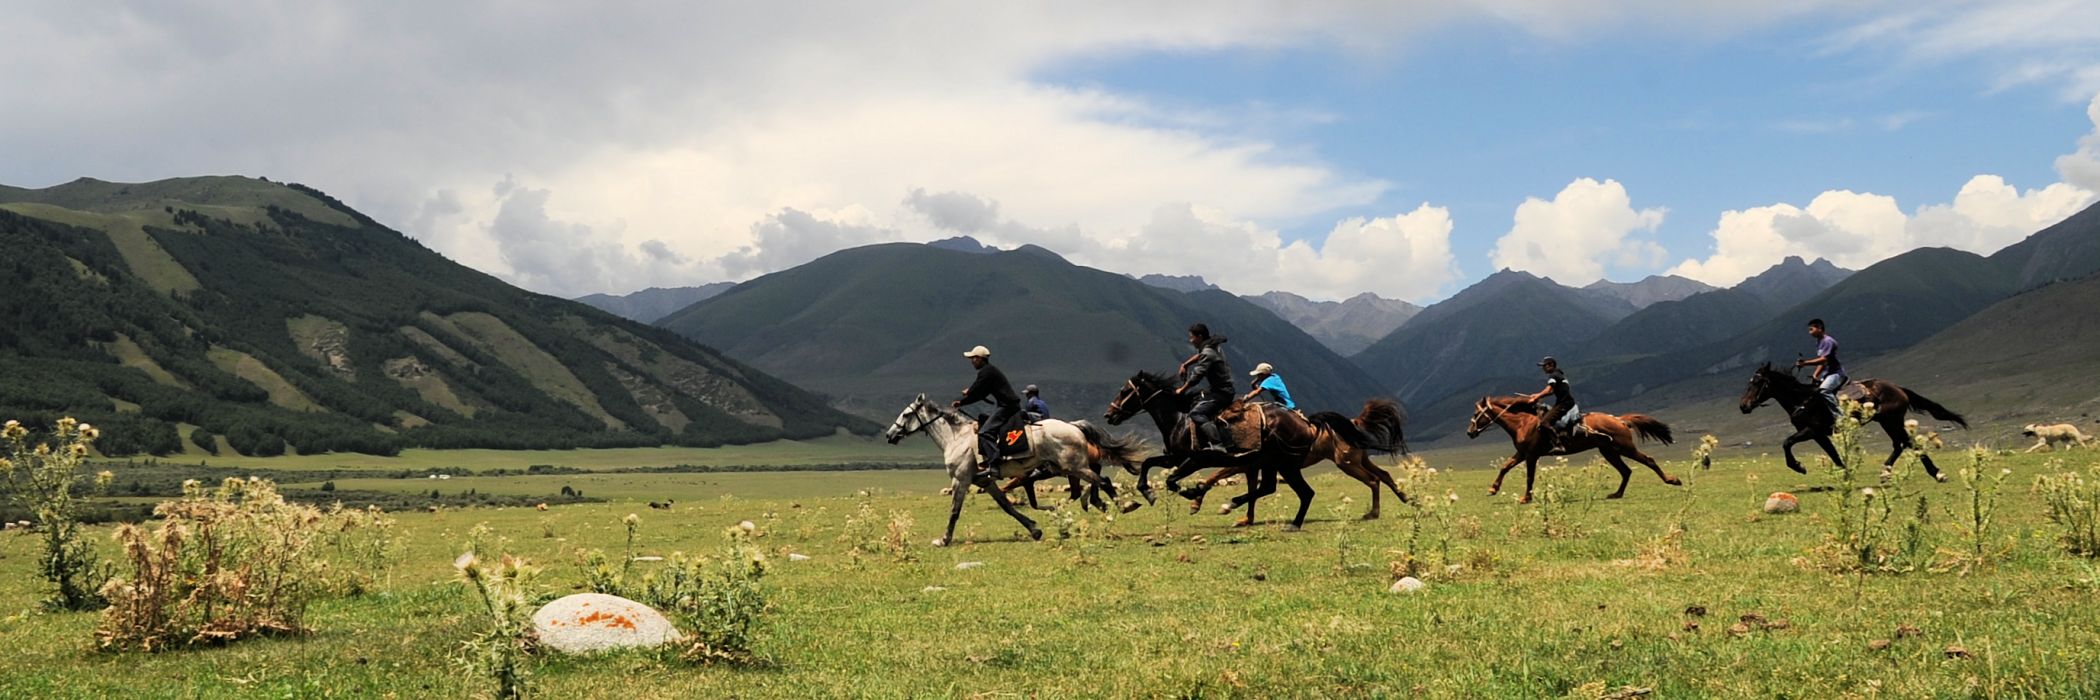 Kok-boru: The national horse game of Kyrgyzstan